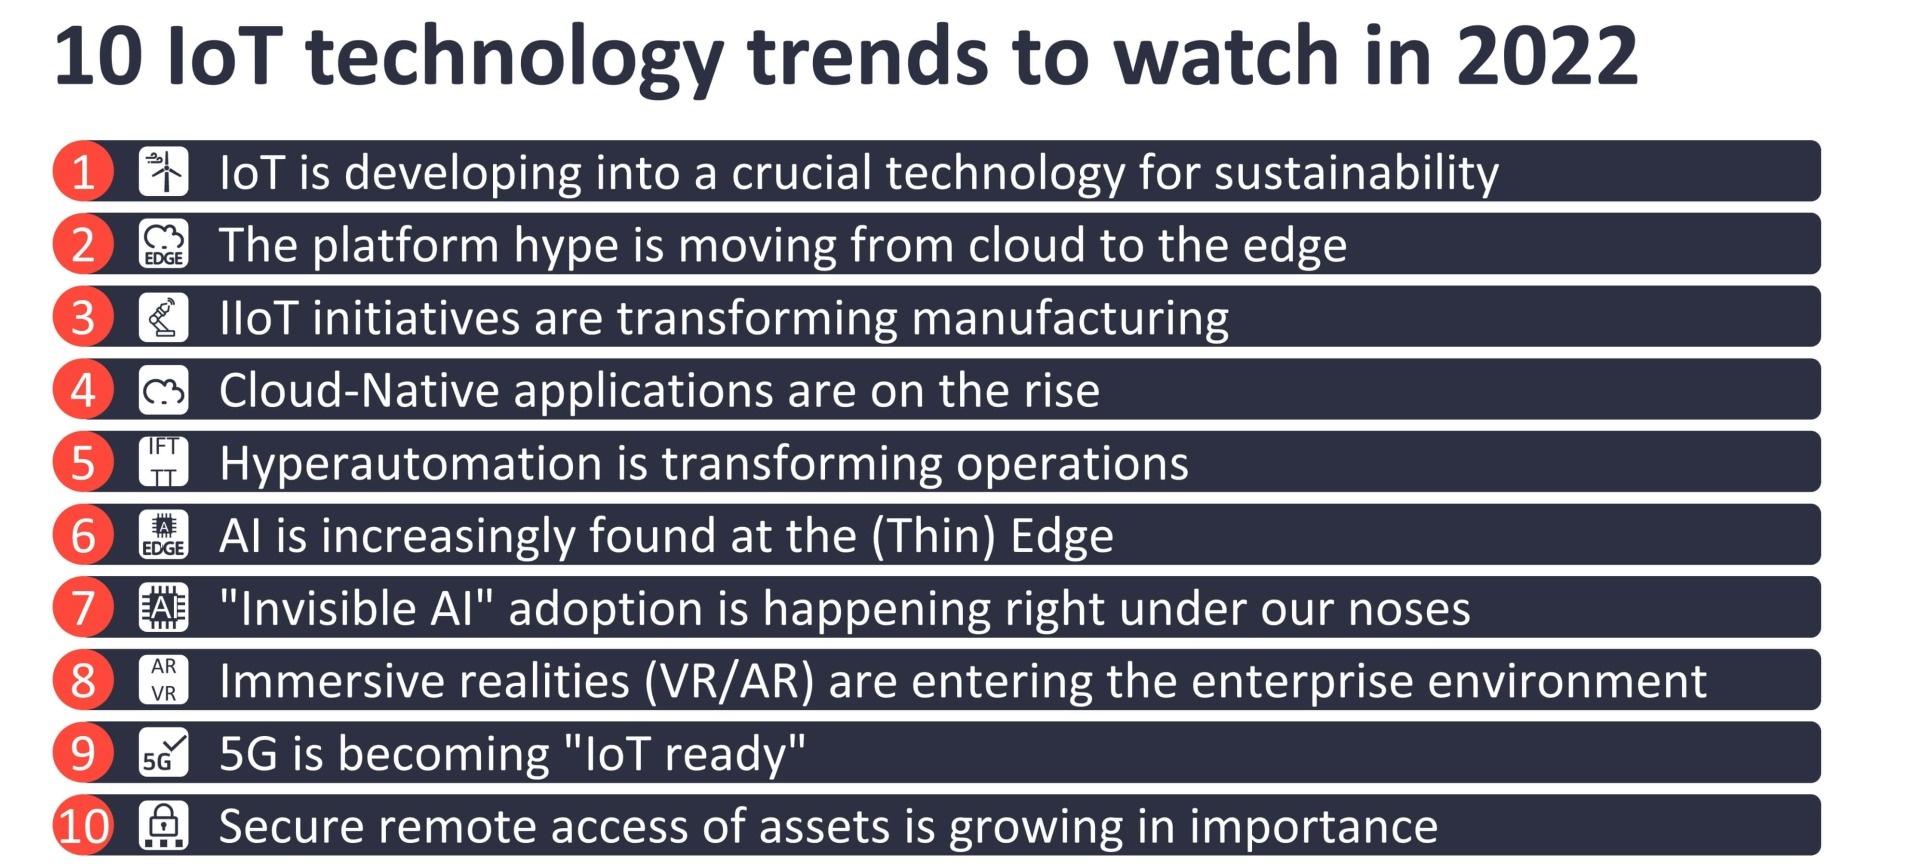 IoT_Trends_To_Watch_in_2022.jpg